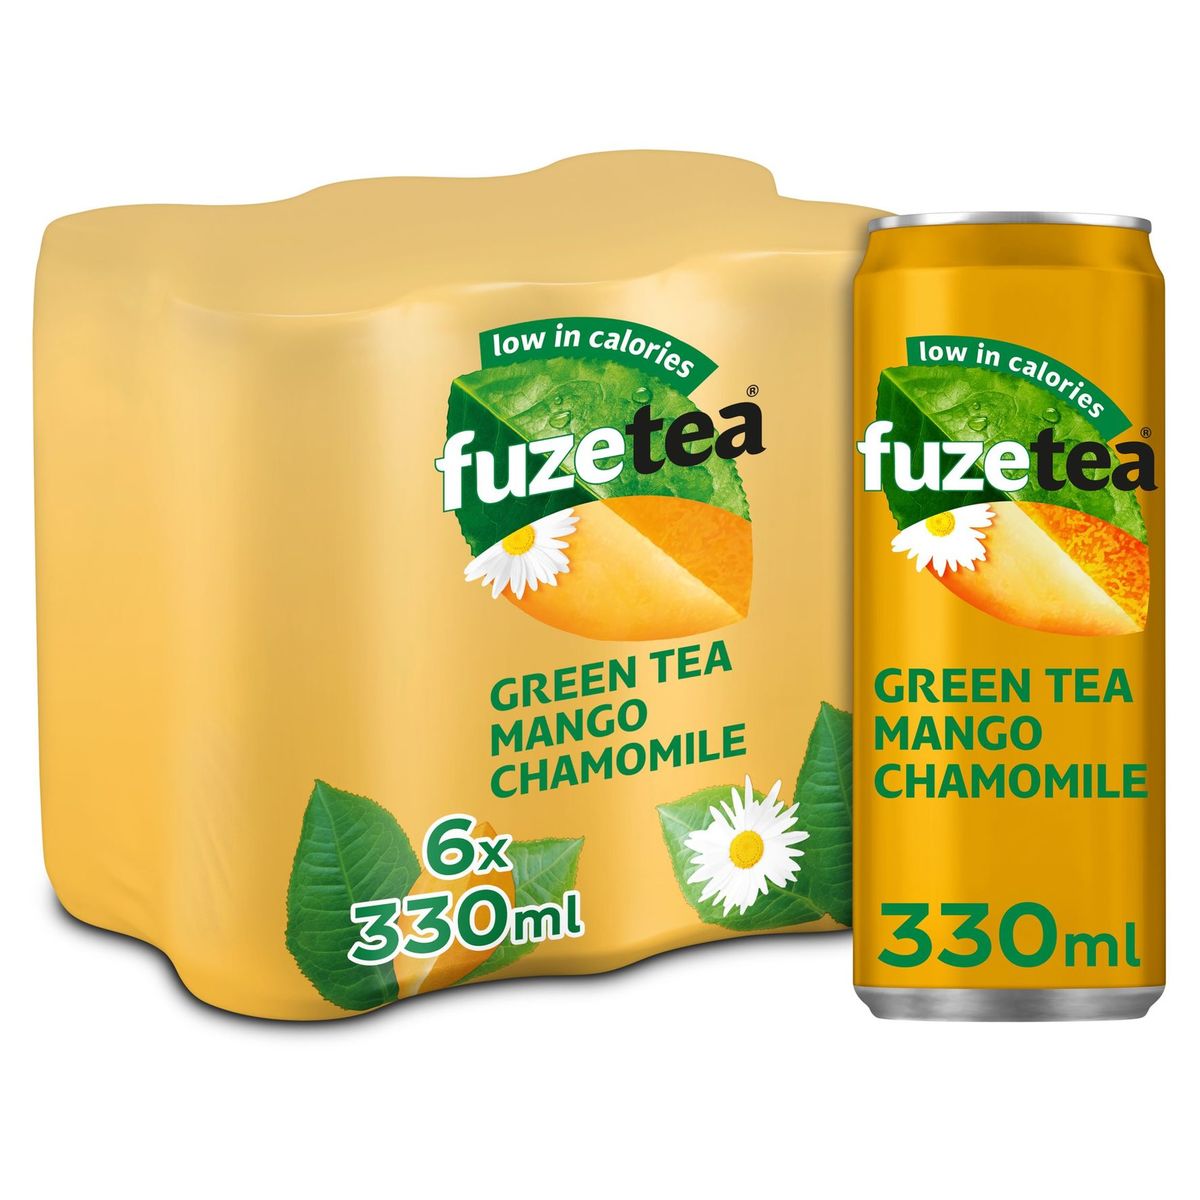 Fuze Tea Green Tea Mango Chamomile   Iced Tea 6 x 330 ml